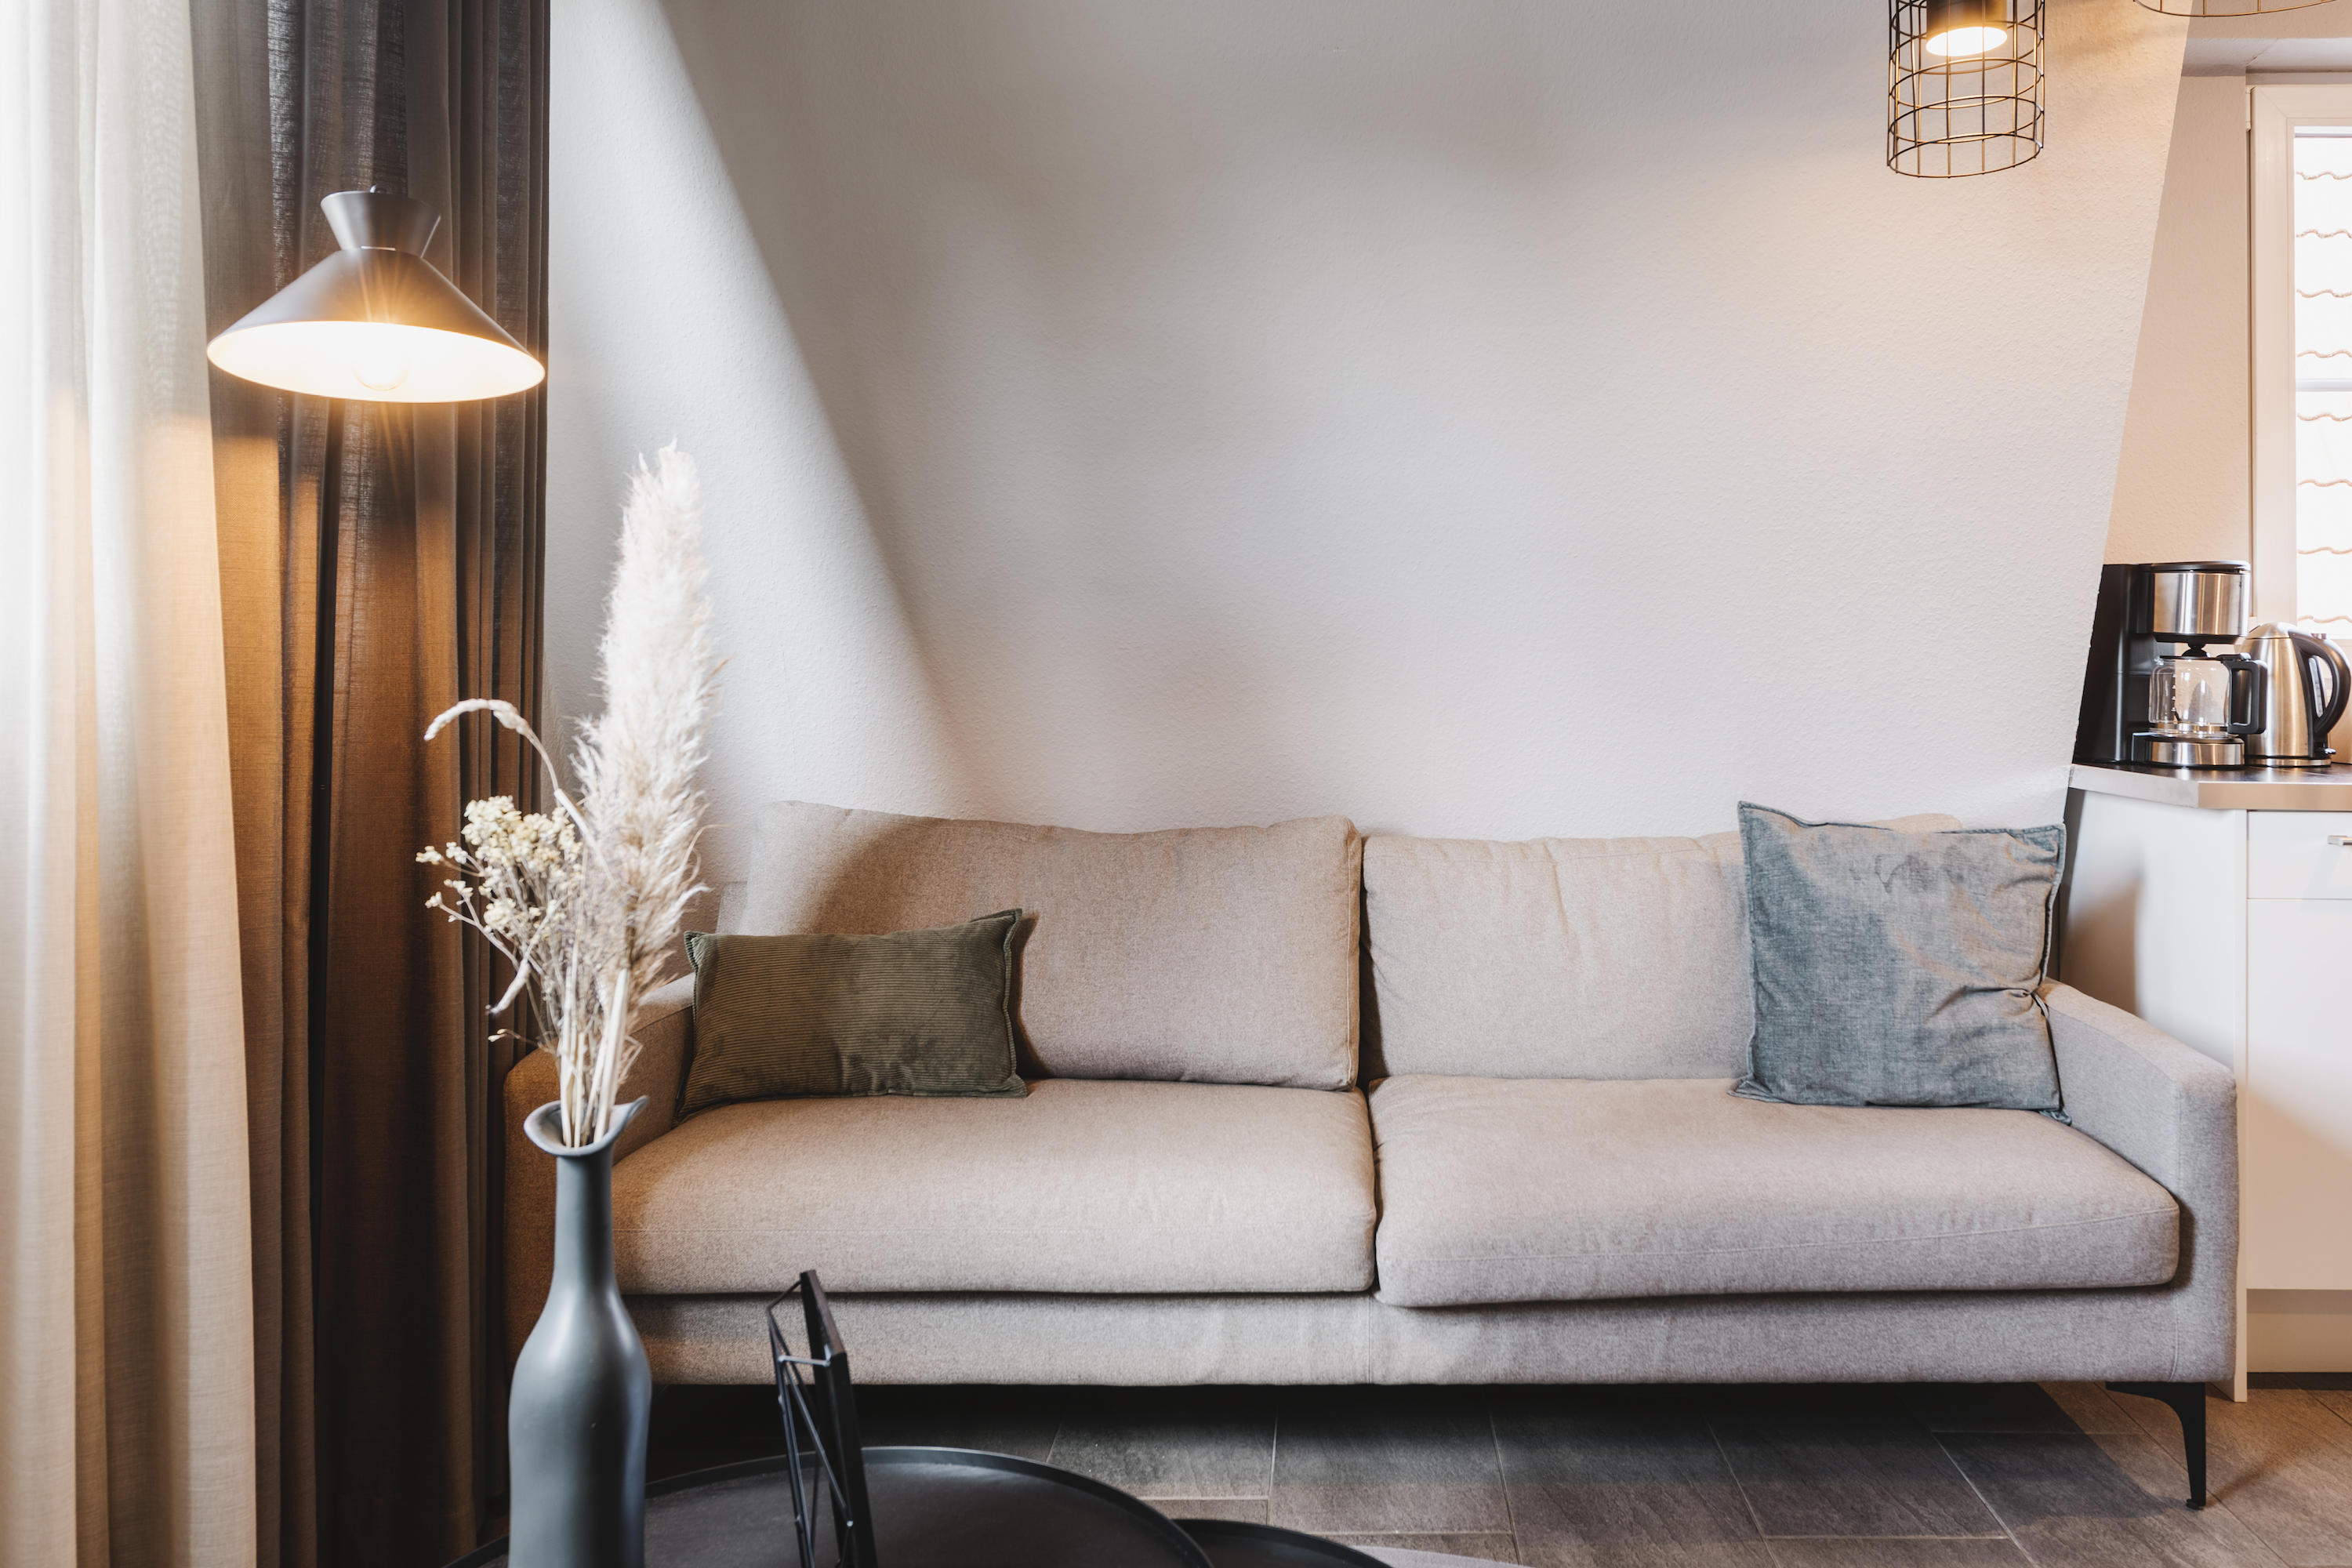 Sillon sin respaldo  Sofa design, Living room sofa design